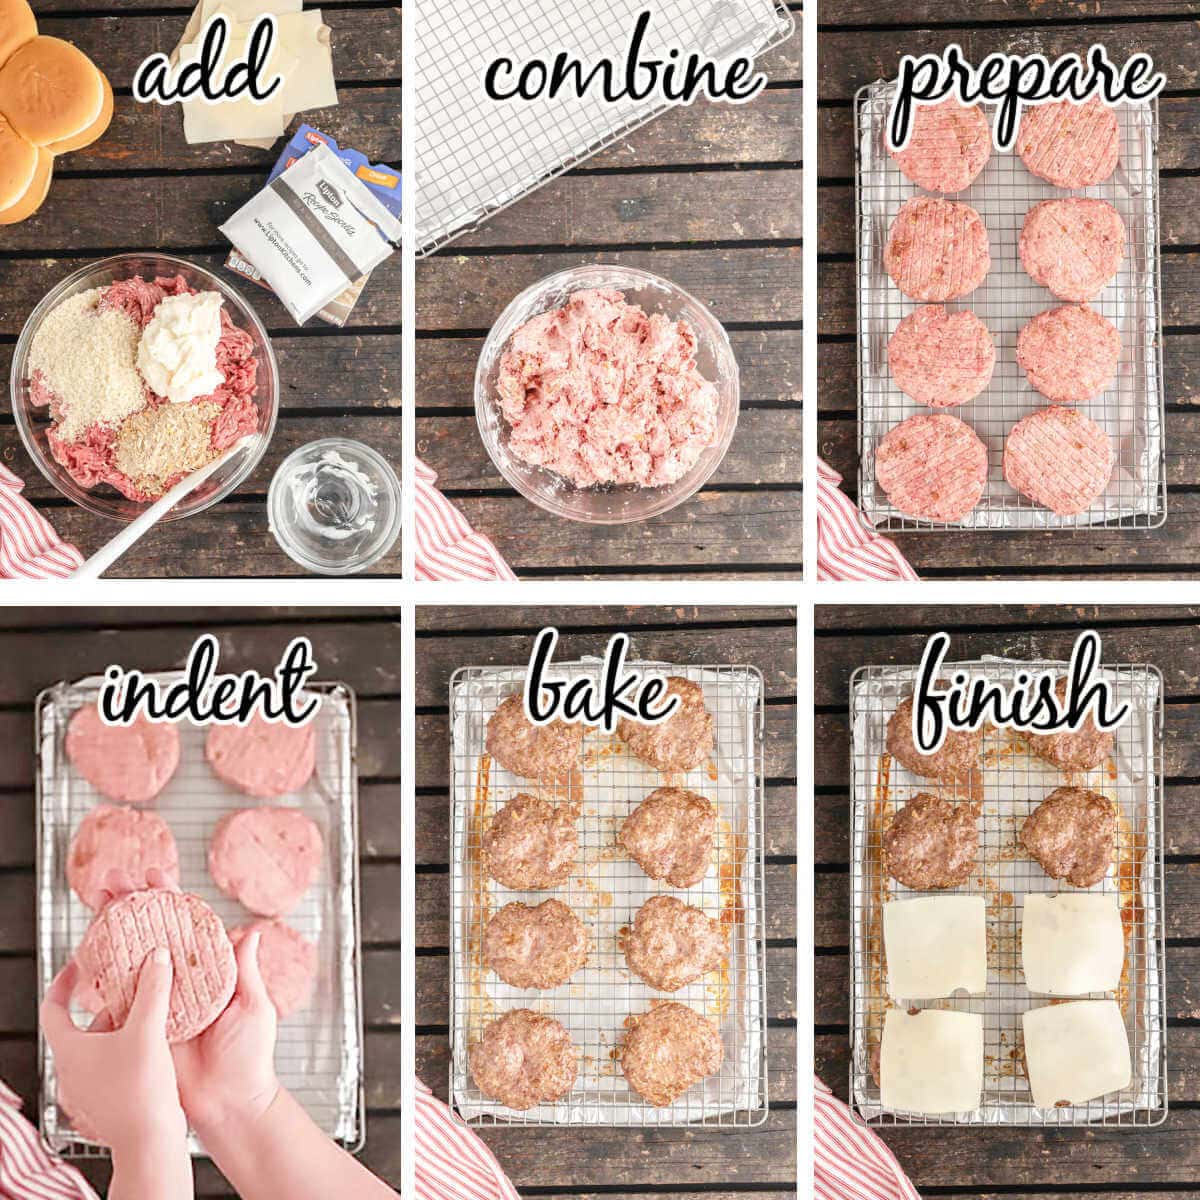 Instructions to make Baked Hamburger Patties recipe, with print overlay. 